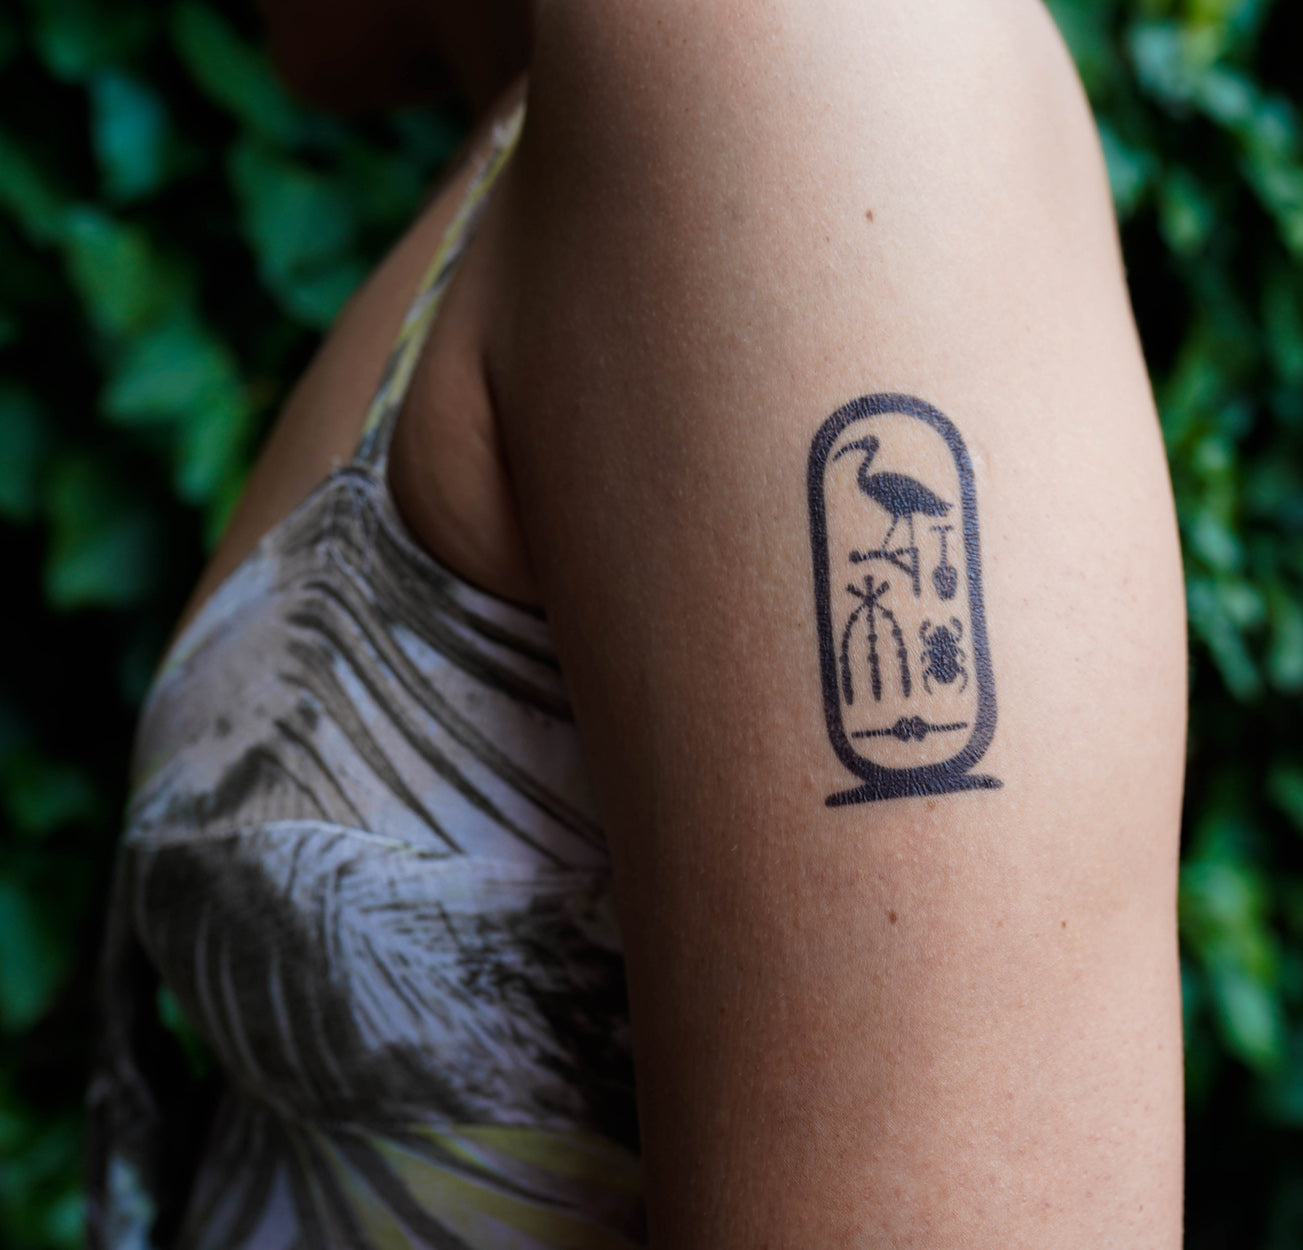 35+ Amazing Egyptian Tattoo Designs